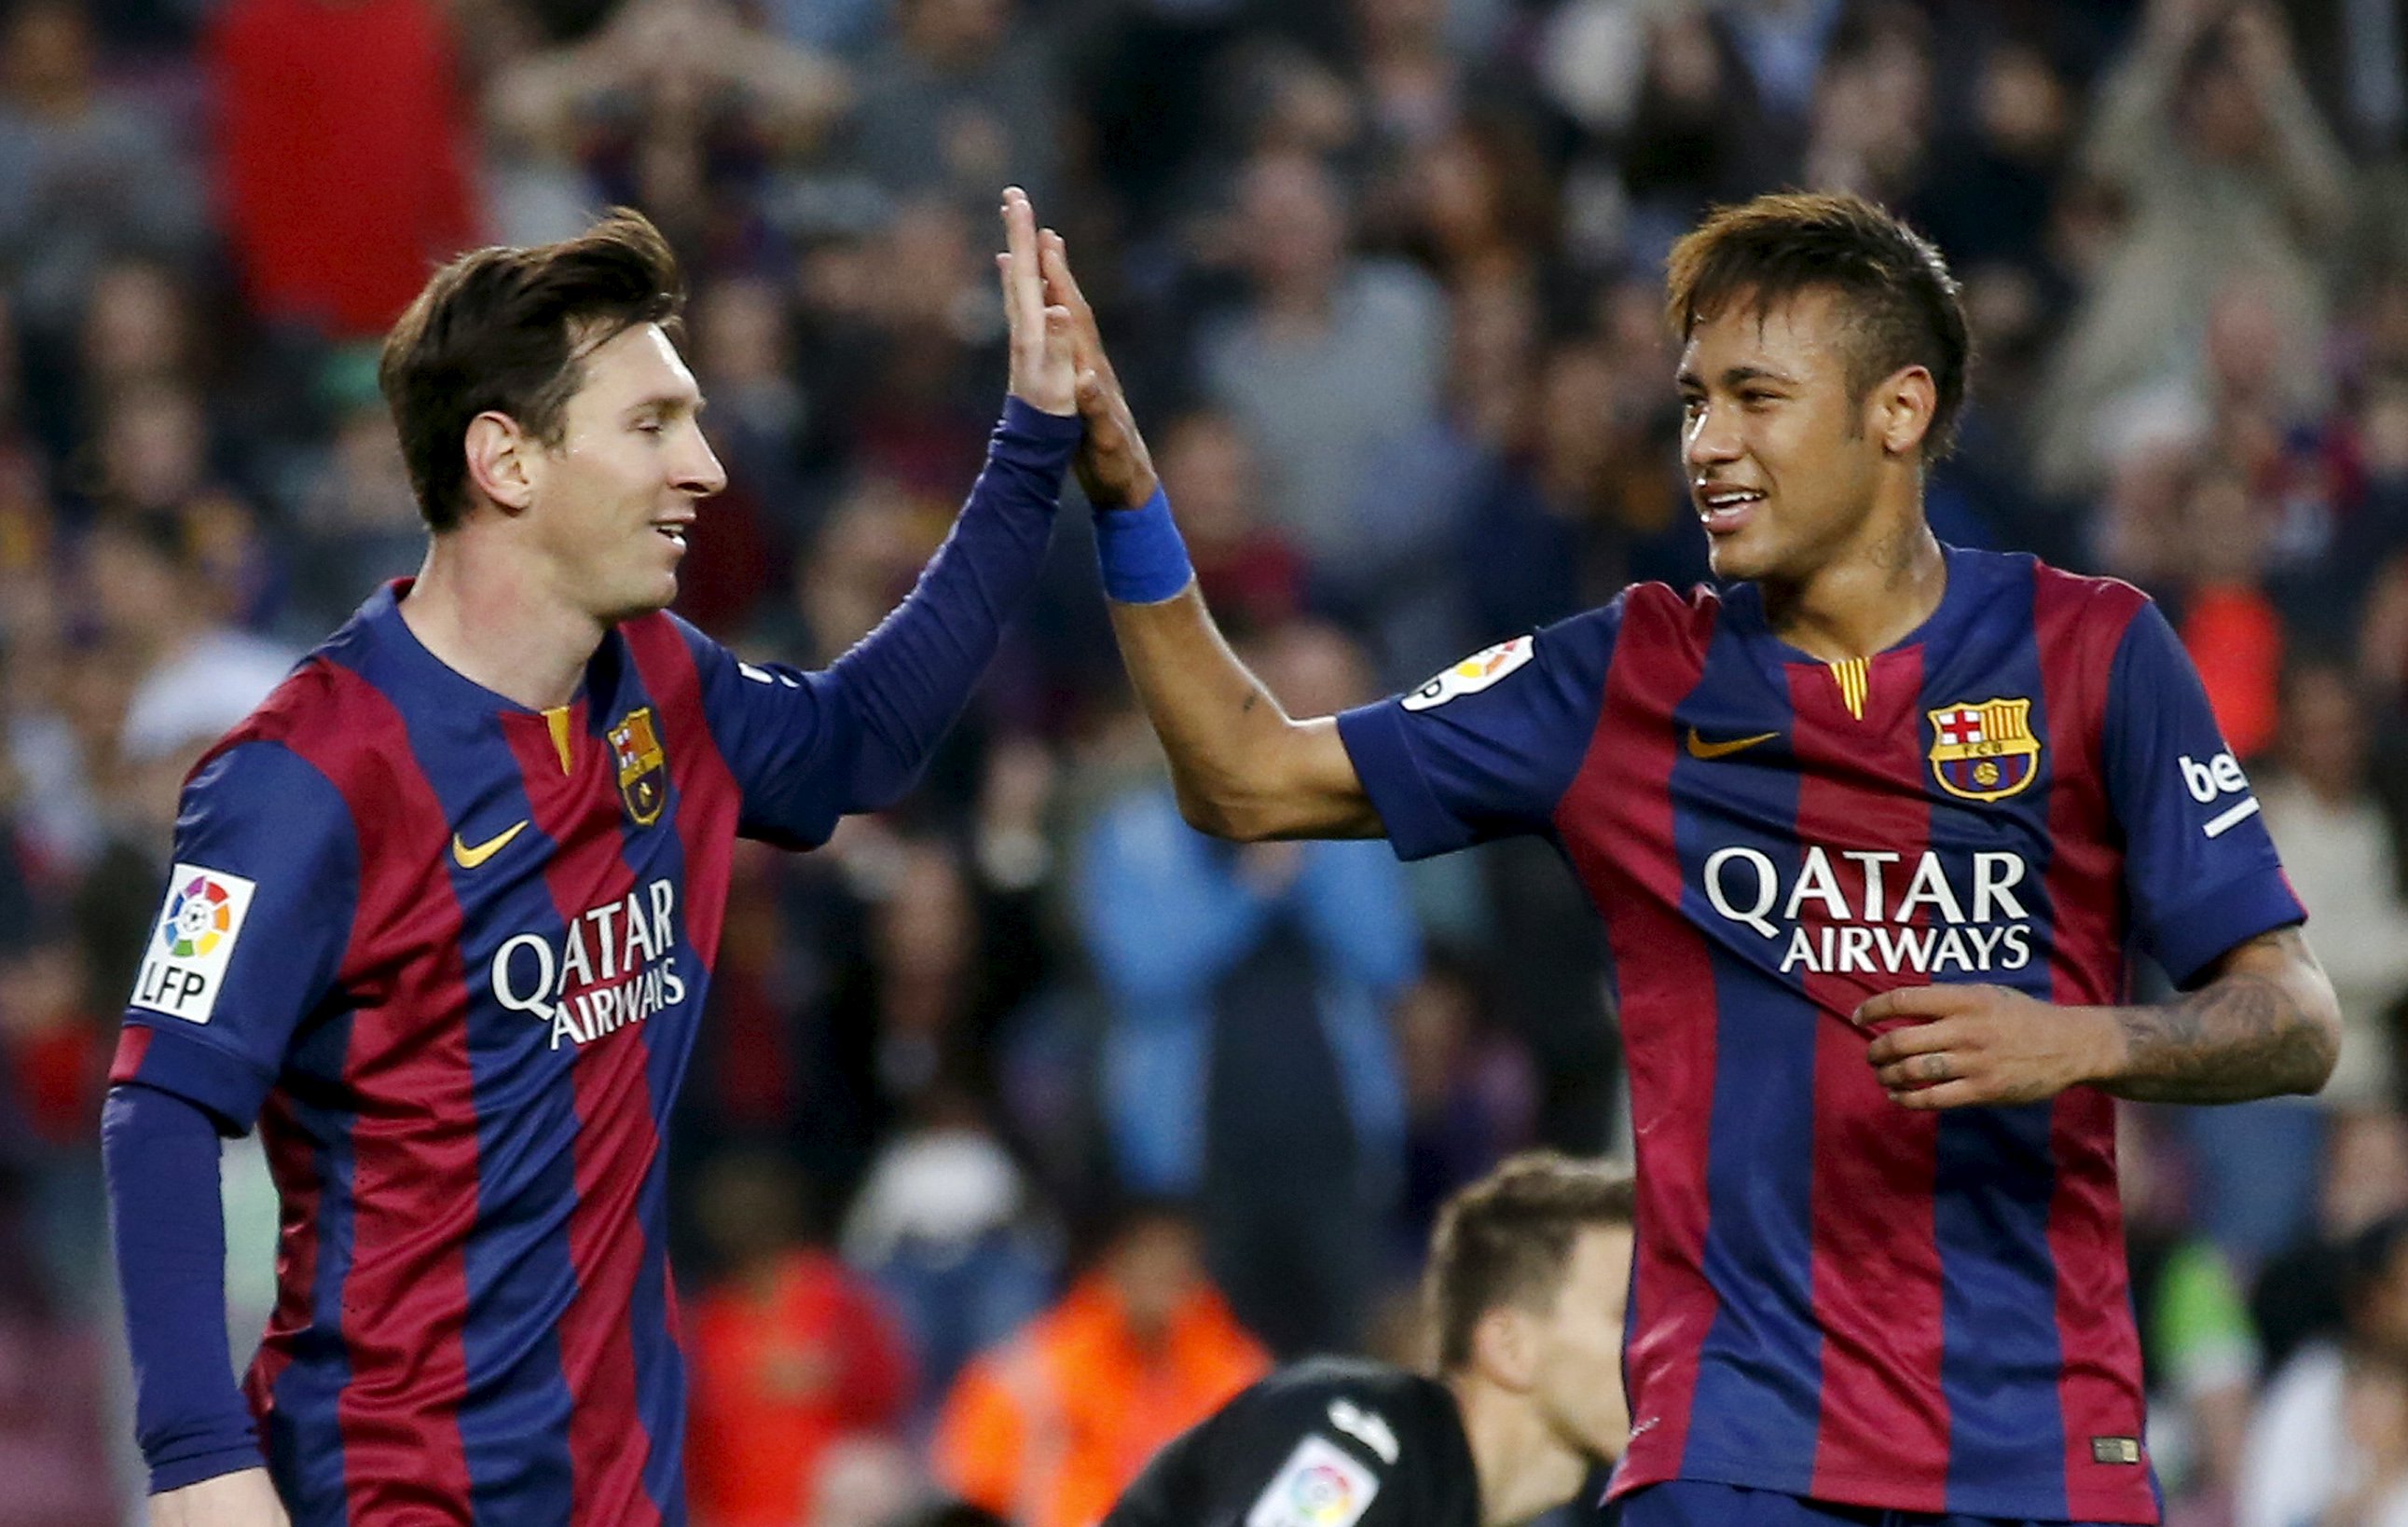 Barcelona's 'MSN' trio lead 6-0 rout of Getafe